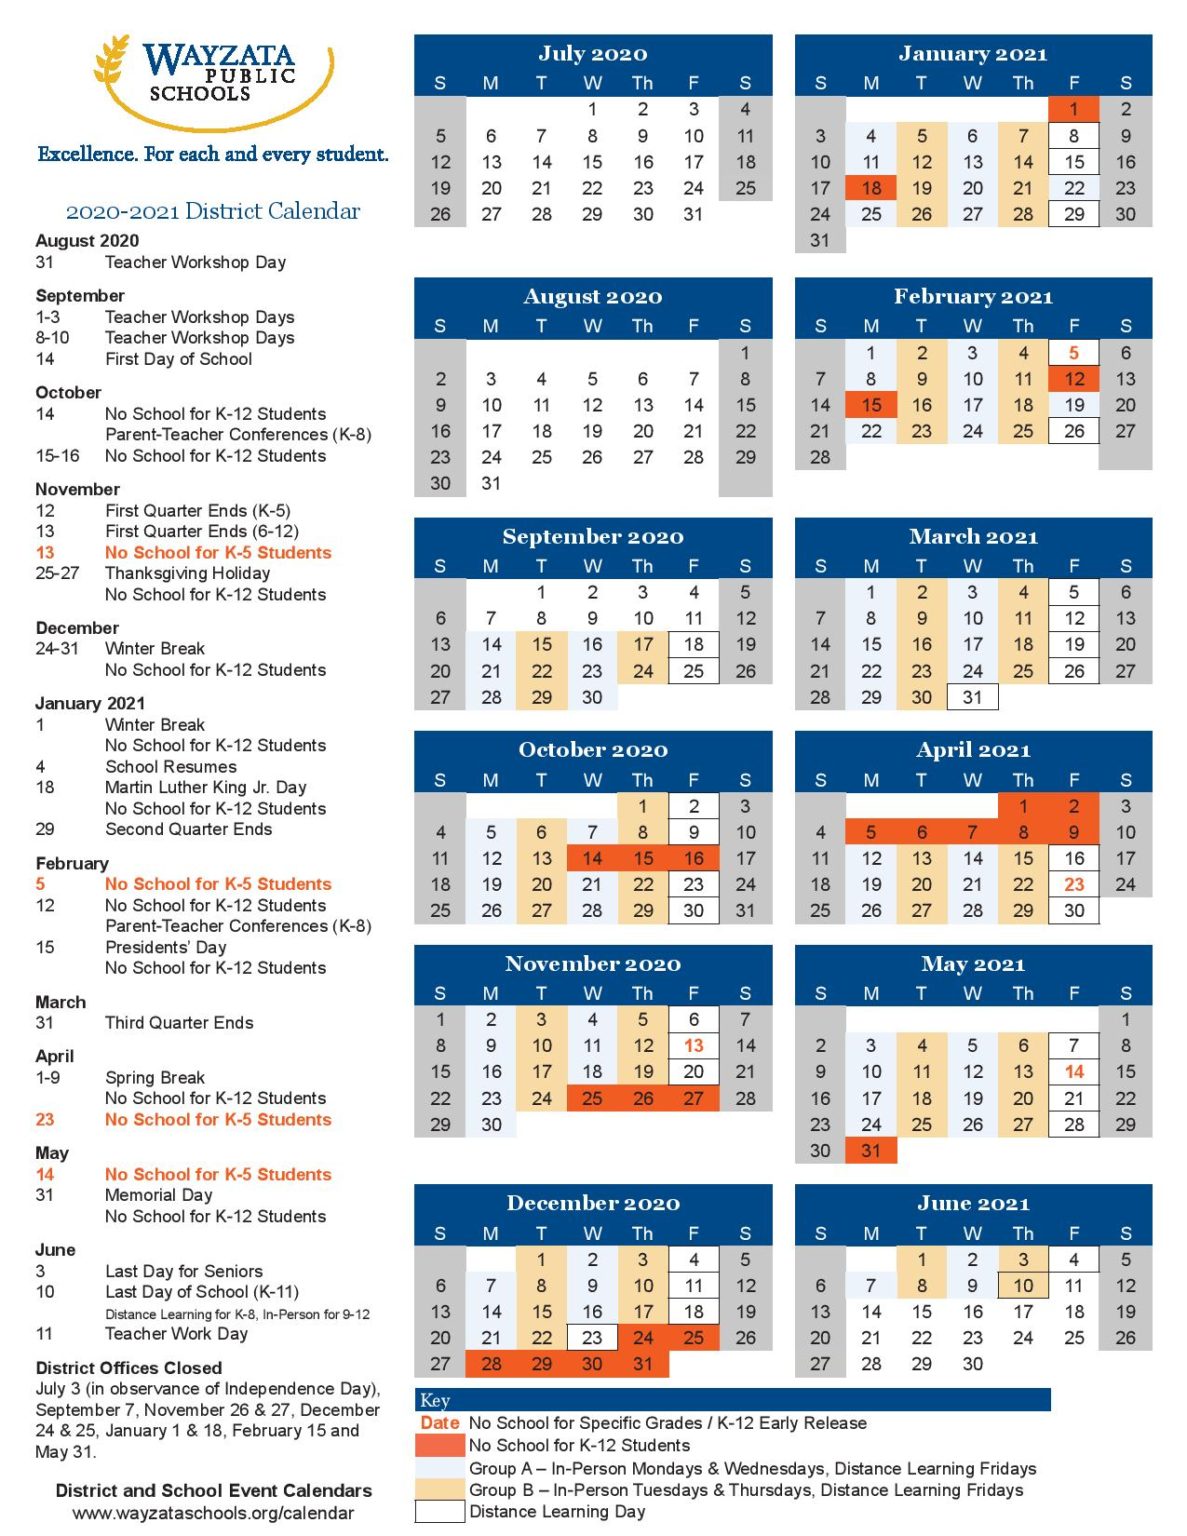 Wayzata Public Schools Calendar 2020-2021 in PDF